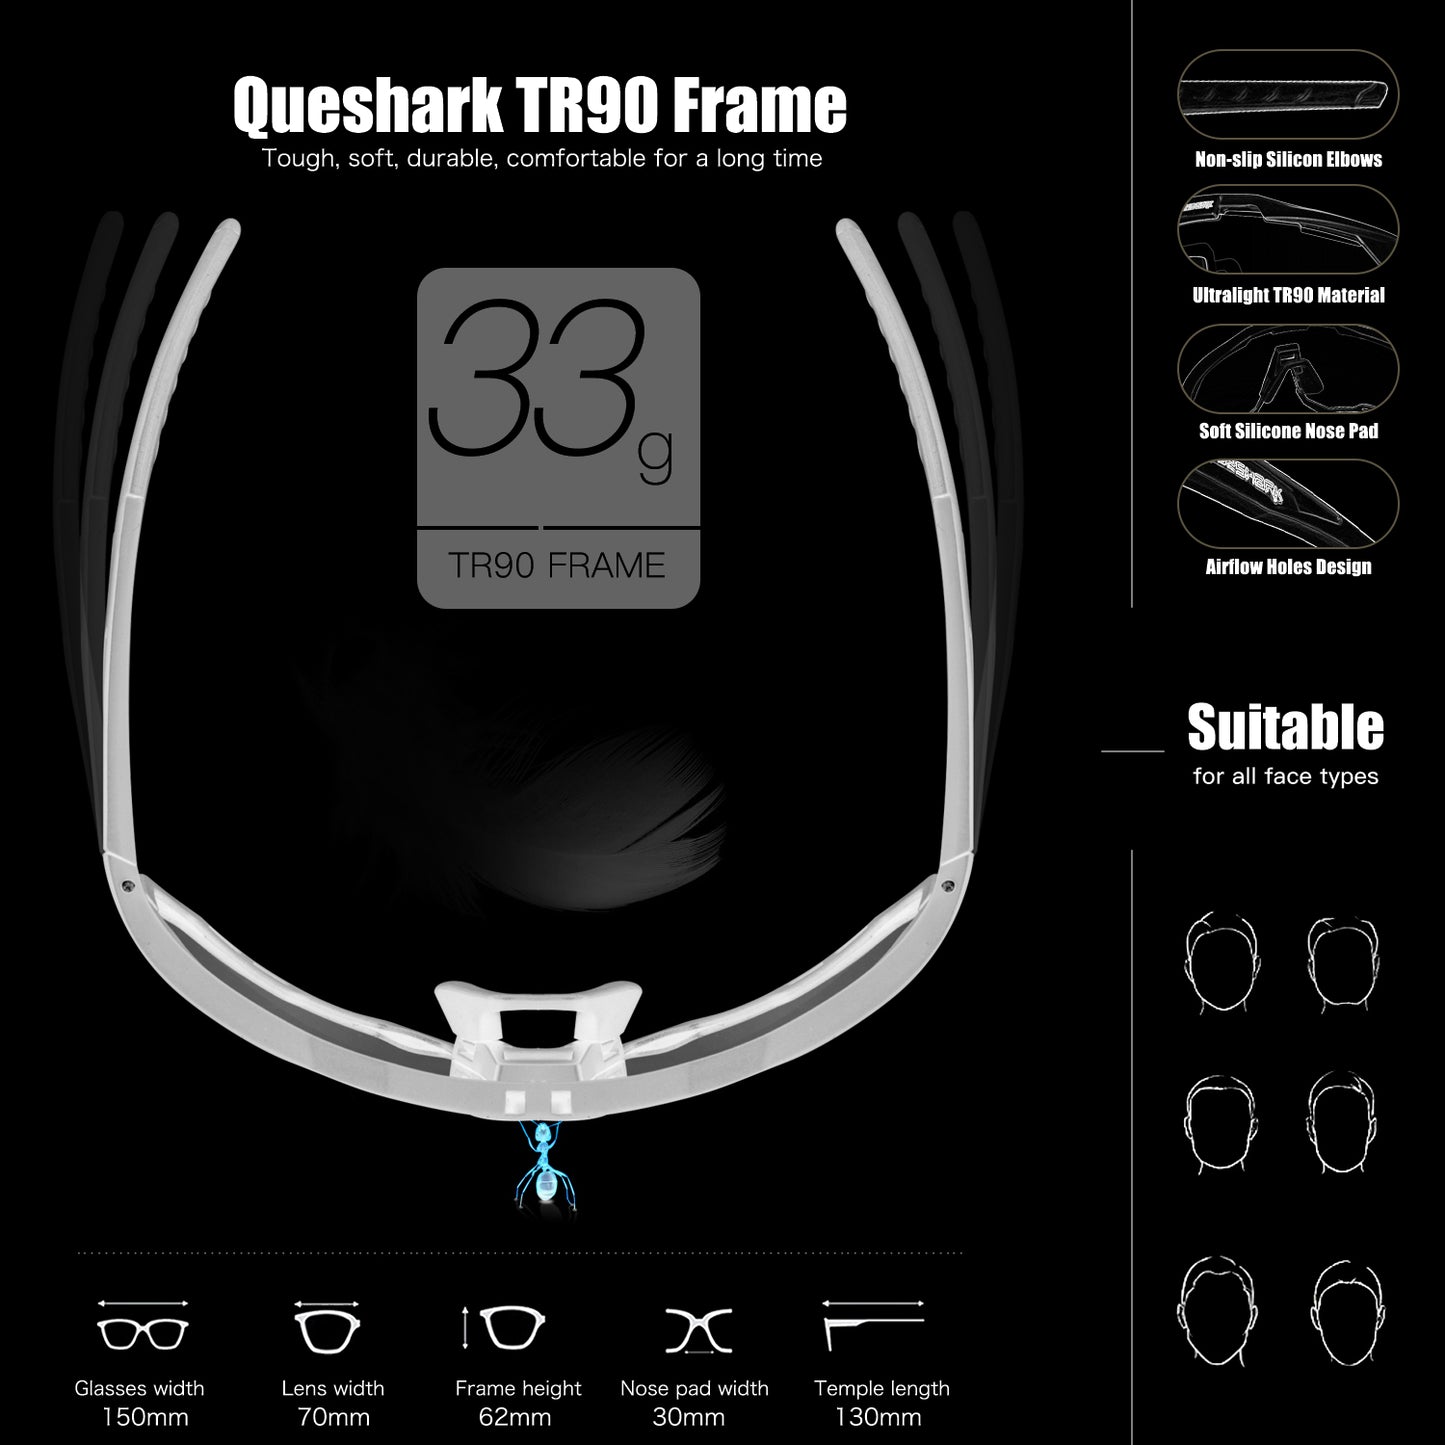 <transcy>QE52 ​​Schwarz Polarisierte Fahrradbrille Herren Damen Sport Sonnenbrille mit austauschbarem Rahmen/Gläser</transcy>